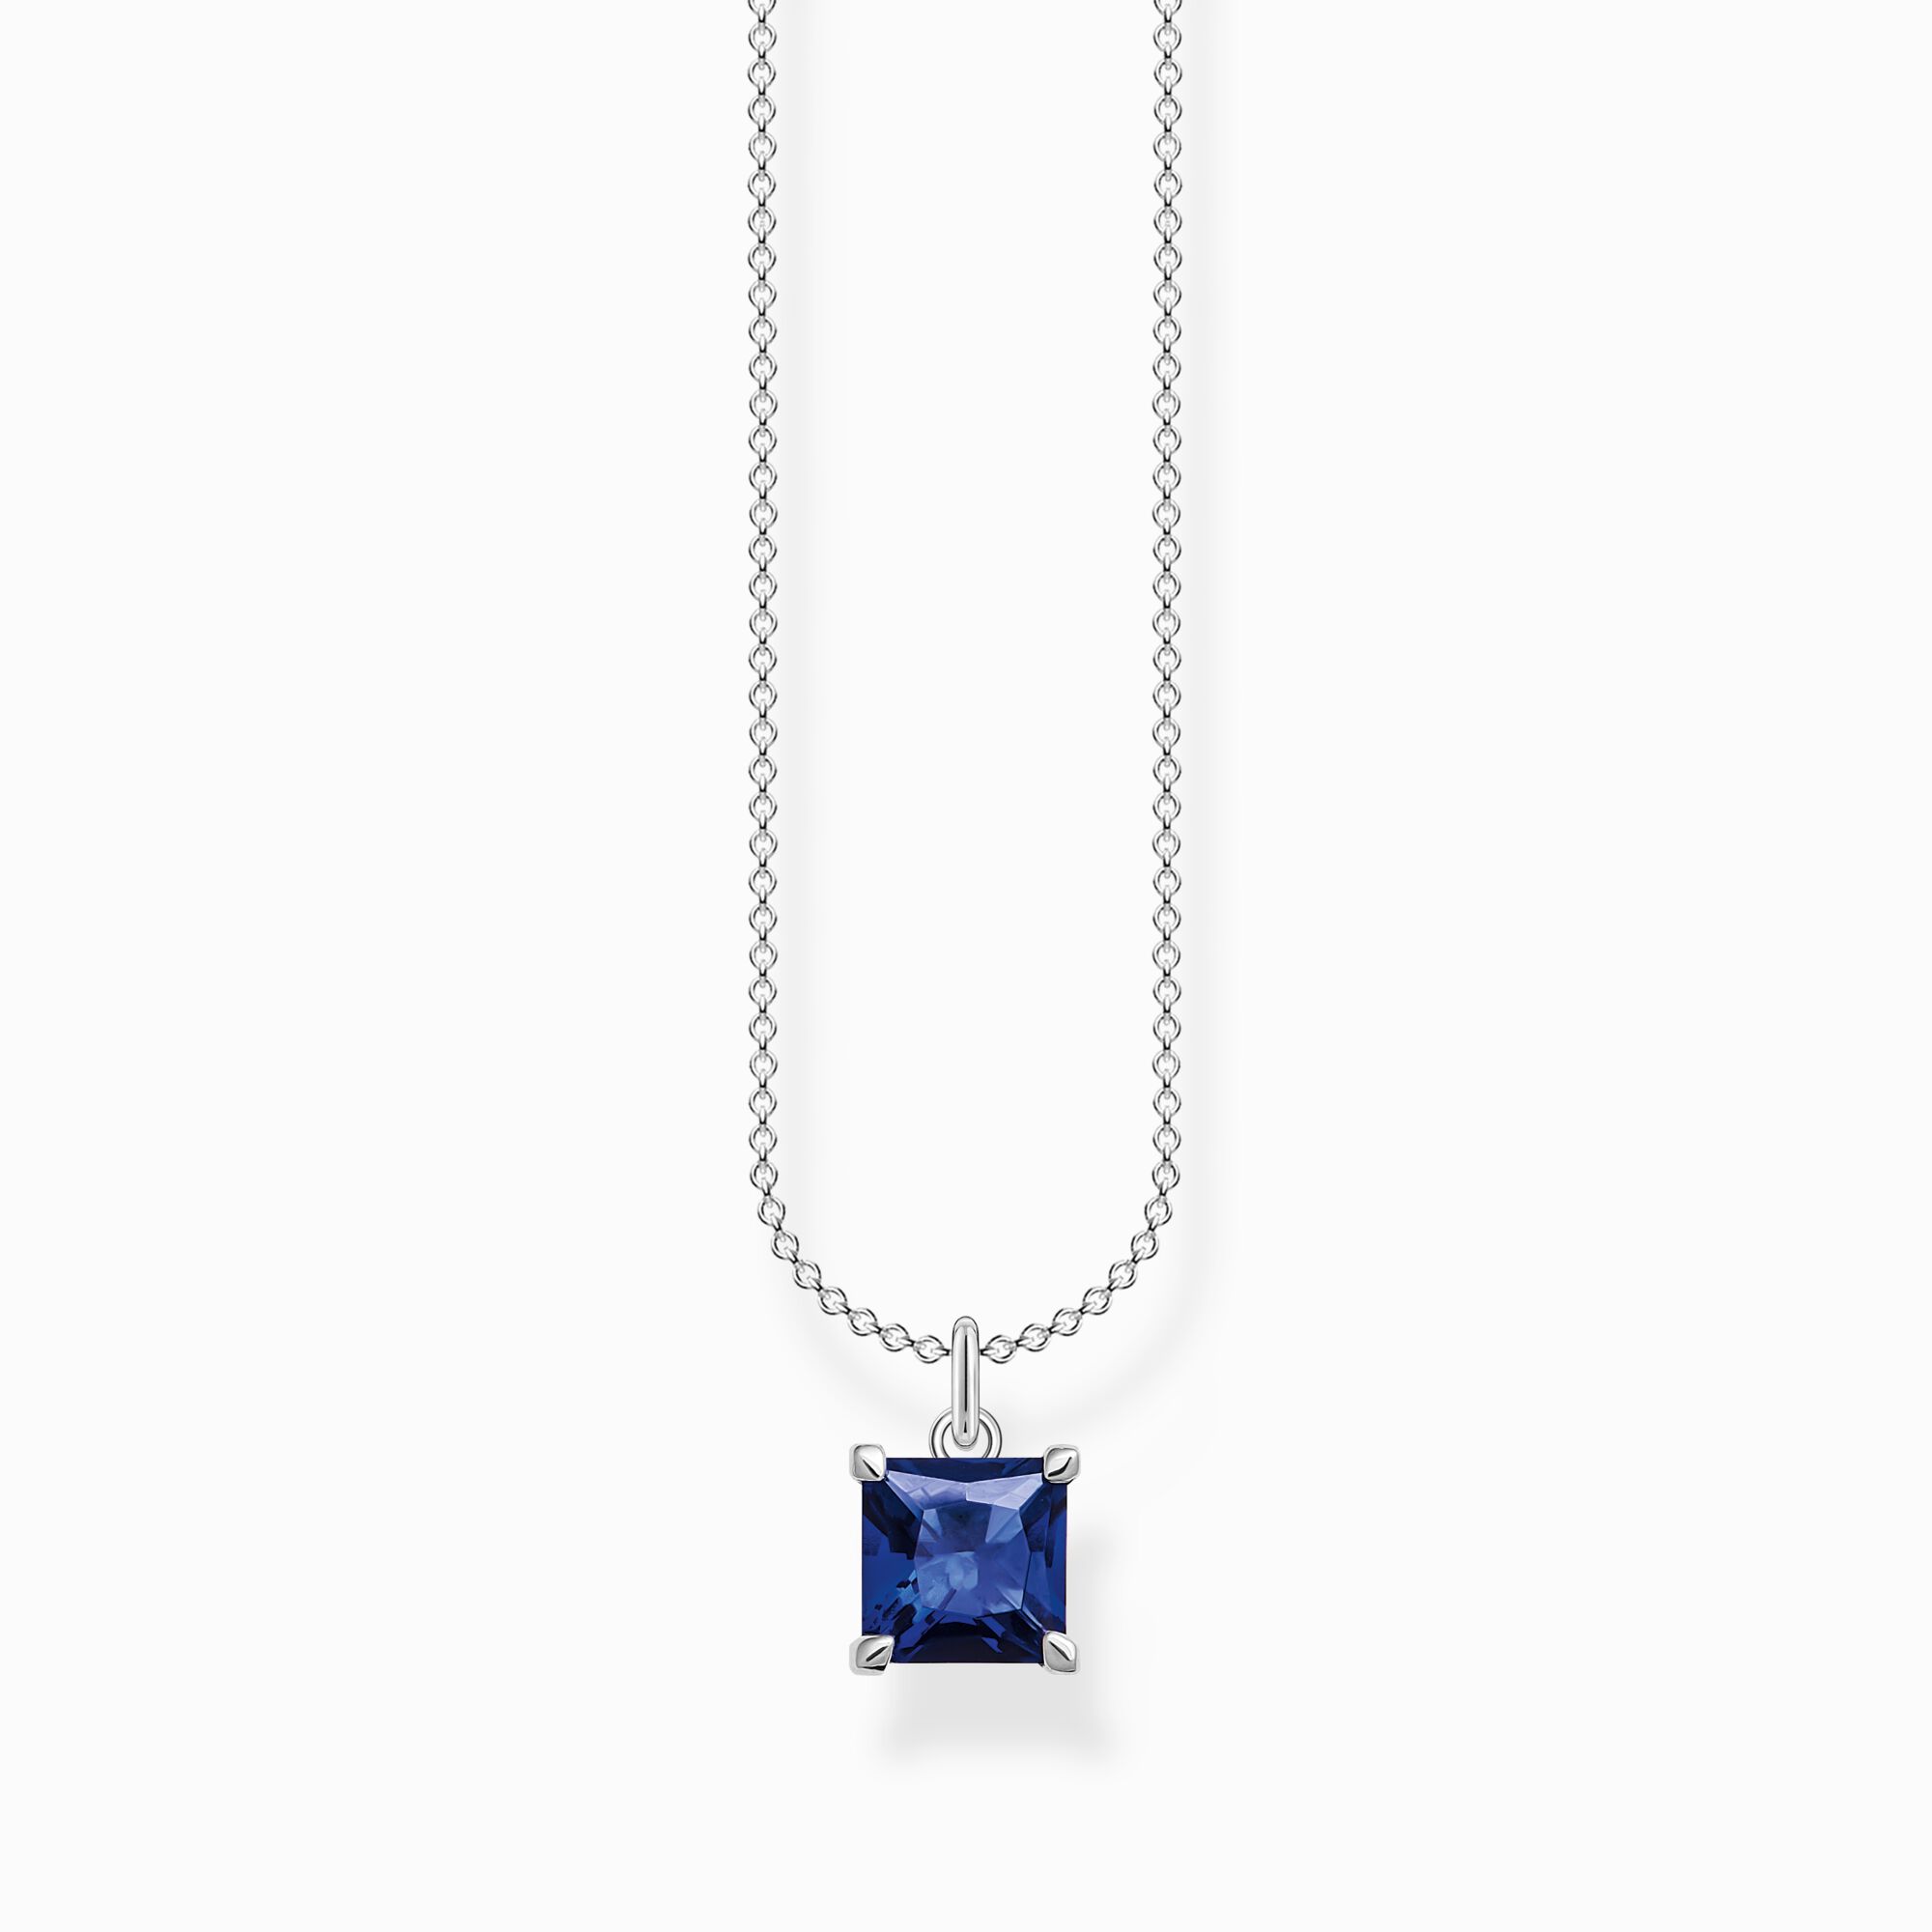 Necklace with THOMAS pendant, SABO stone sapphire blue –